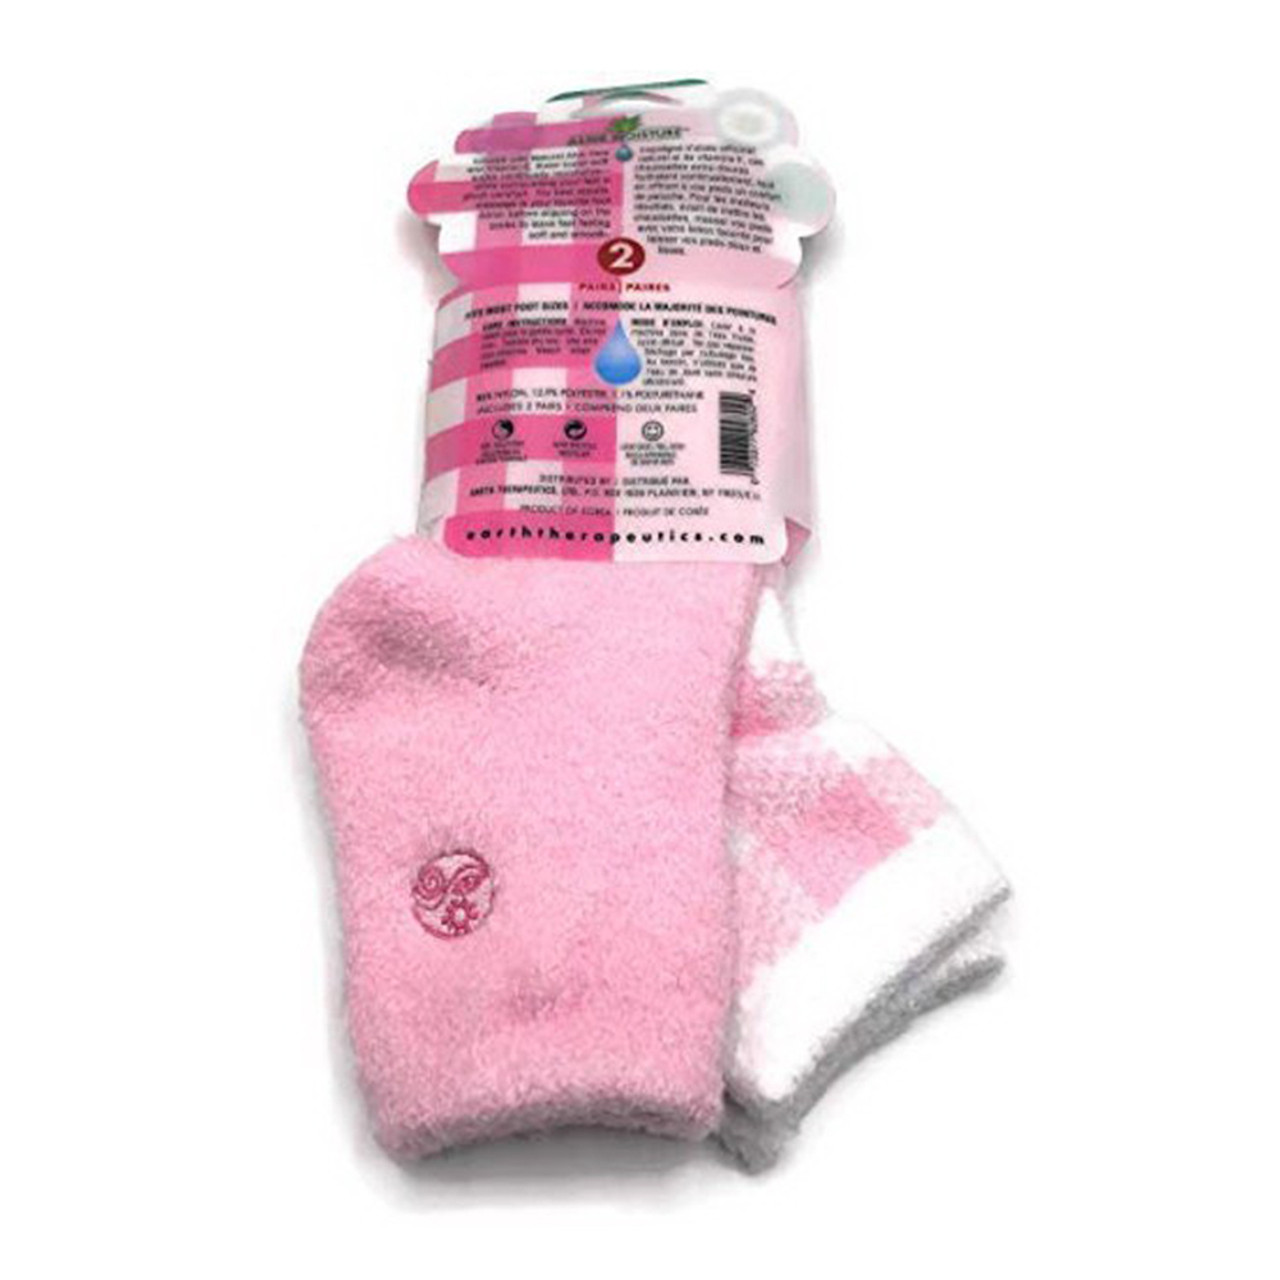 NEW Earth Therapeutics Aloe Infused Socks Pink 1 Pair